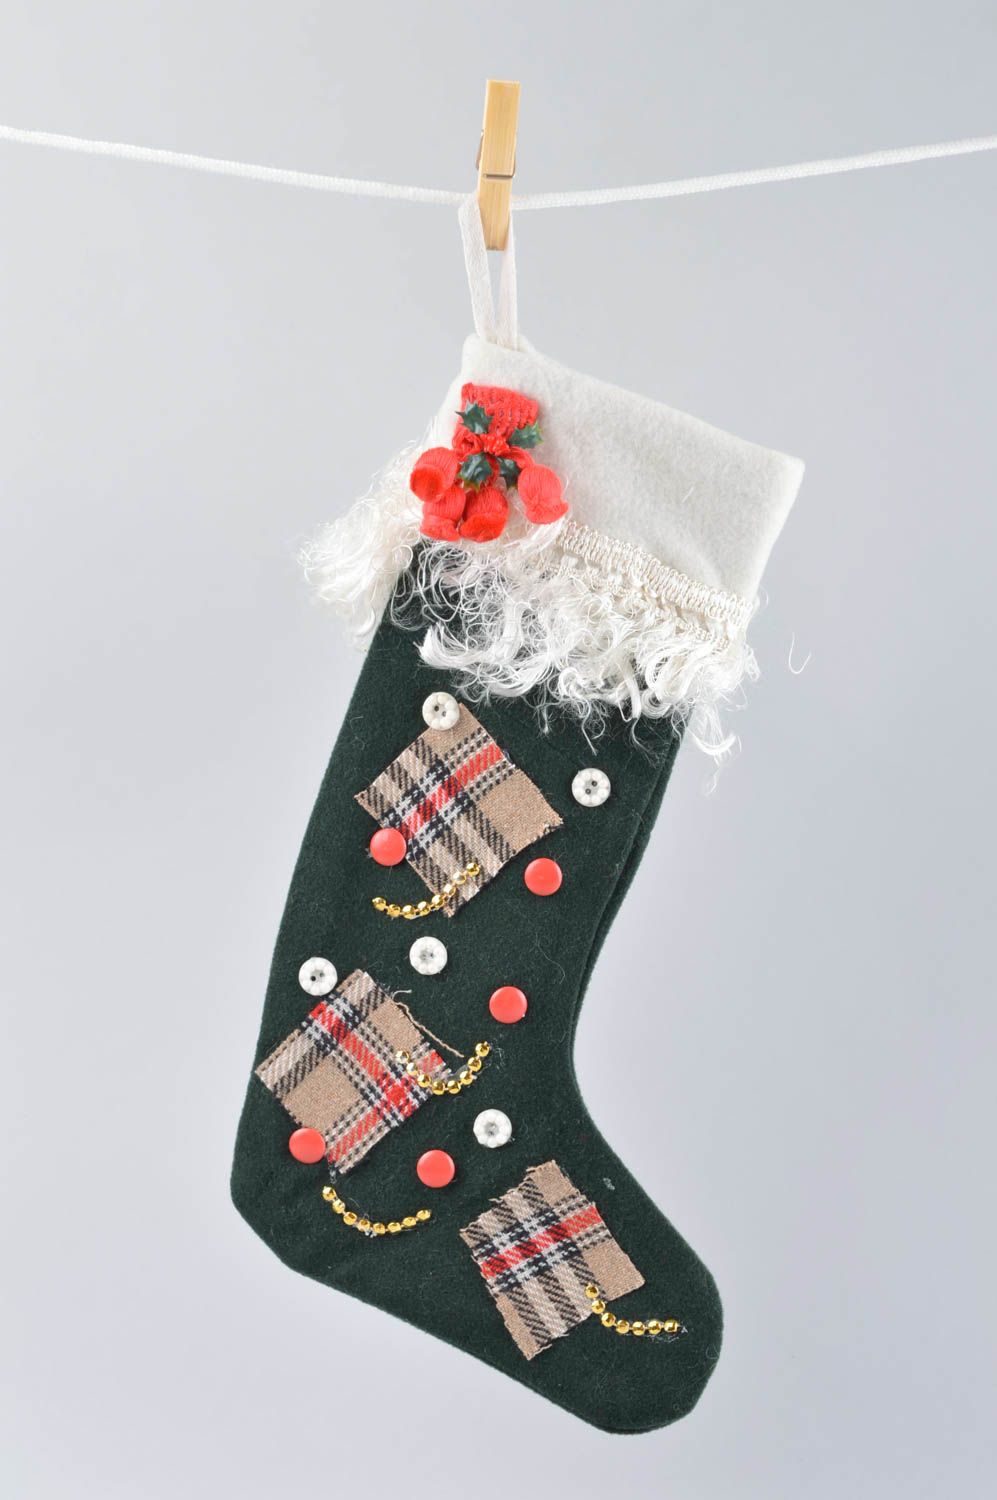 Handmade decorations Christmas stocking Xmas stockings souvenir ideas cool gifts photo 1